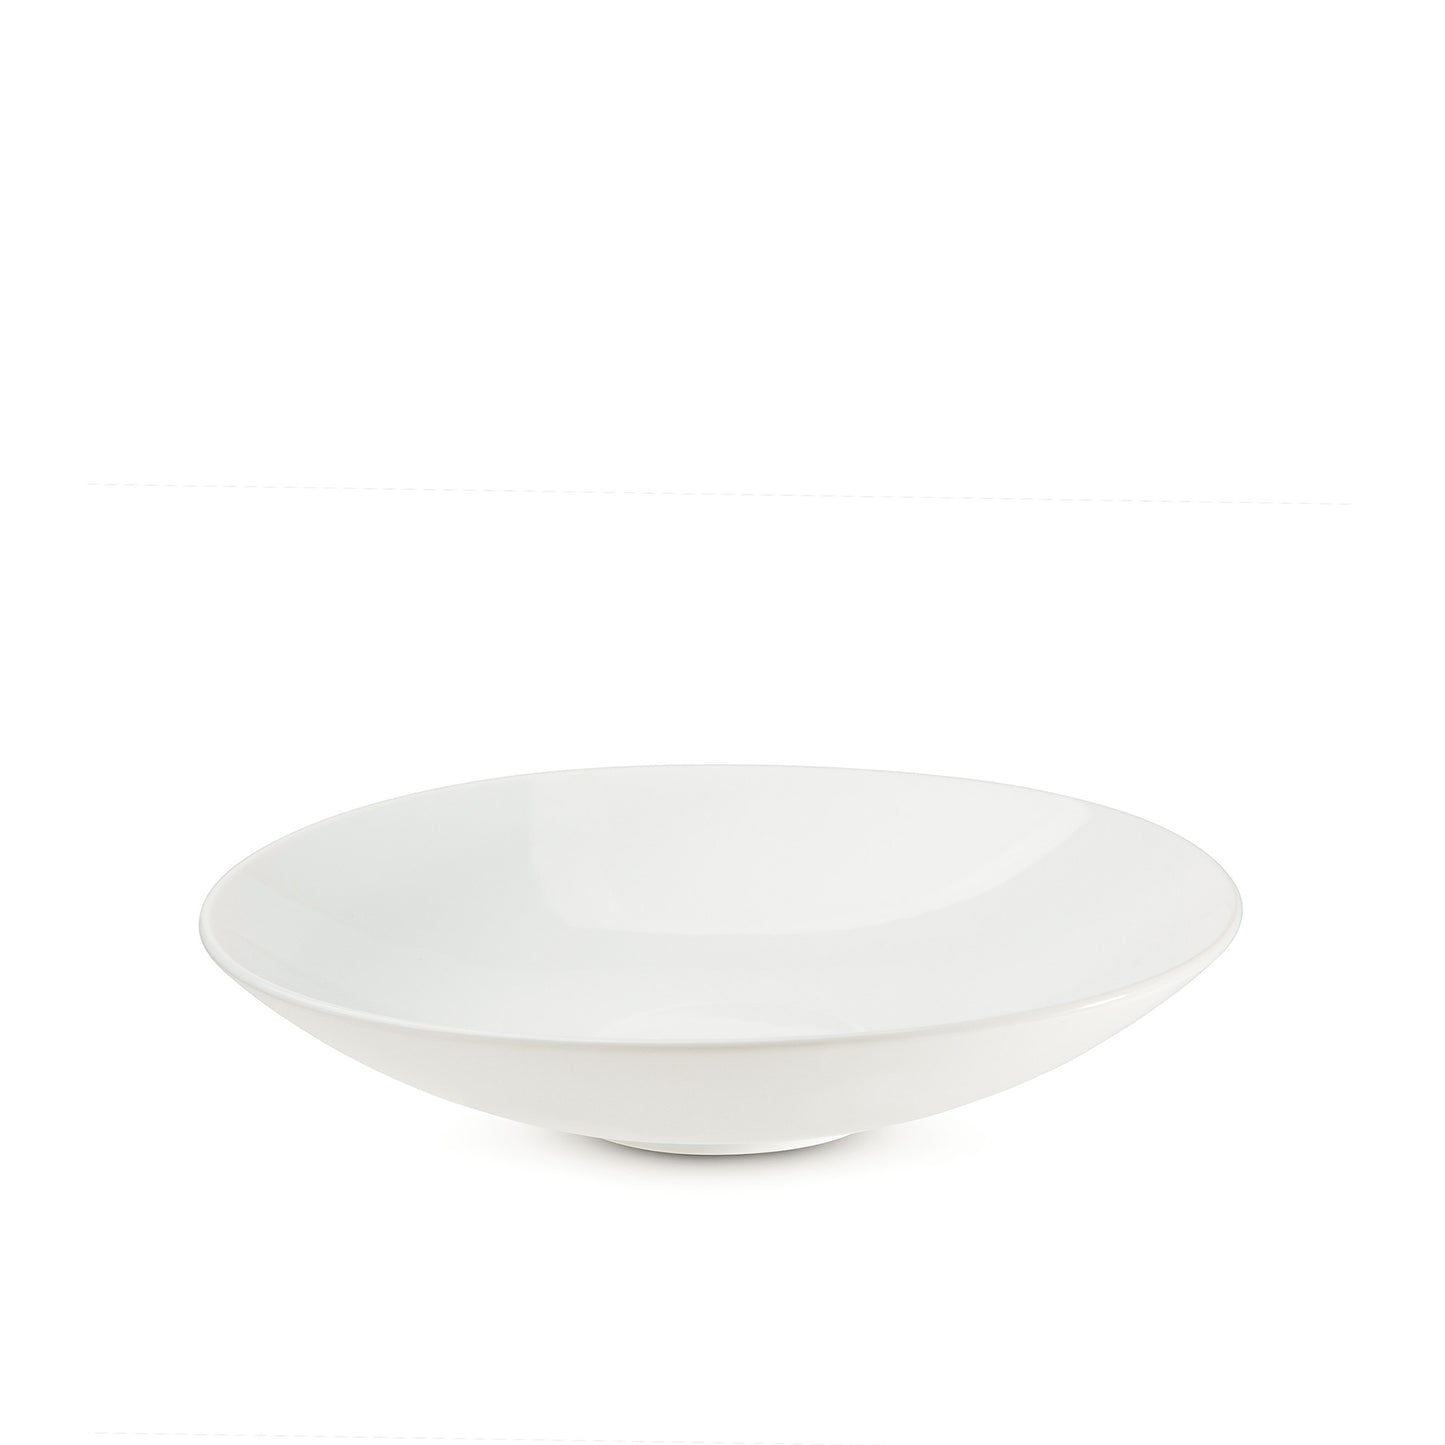 8" white porcelain coupe bowl, salad bowl, soup bowl, 45 degree view, media 3 of 4